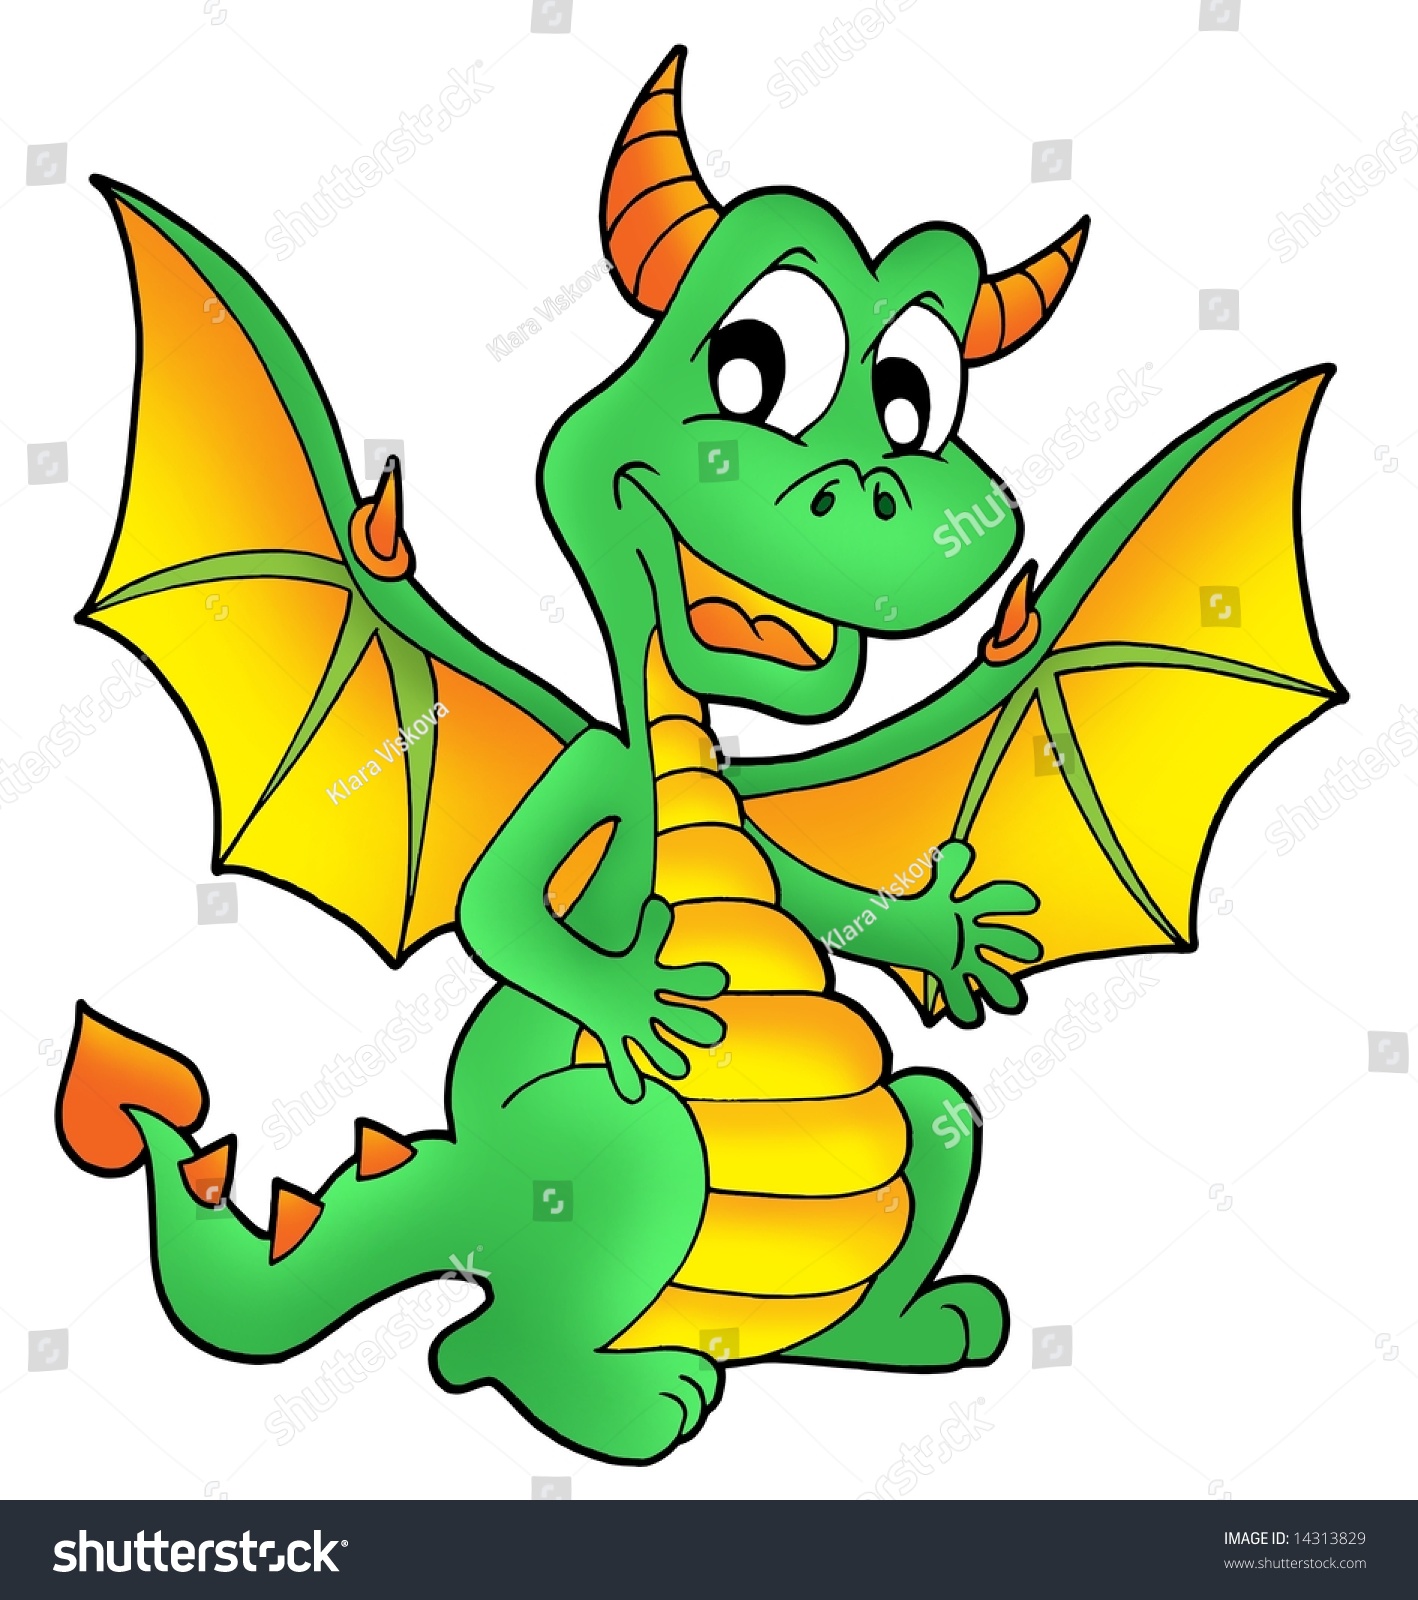 Cute Green Dragon - Color Illustration. - 14313829 : Shutterstock